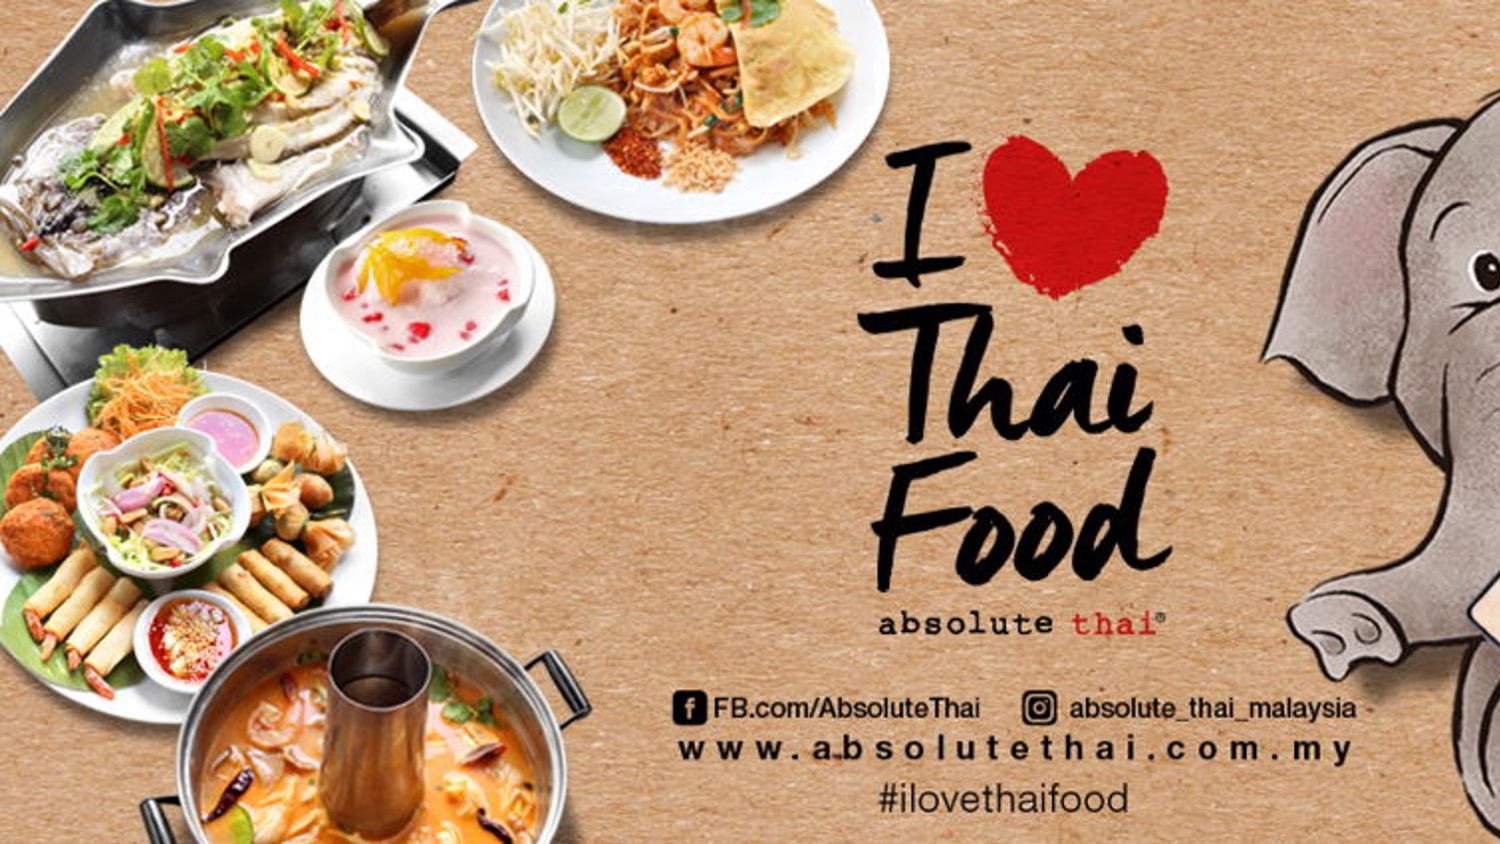 absolute thai menu malaysia - Paul Welch